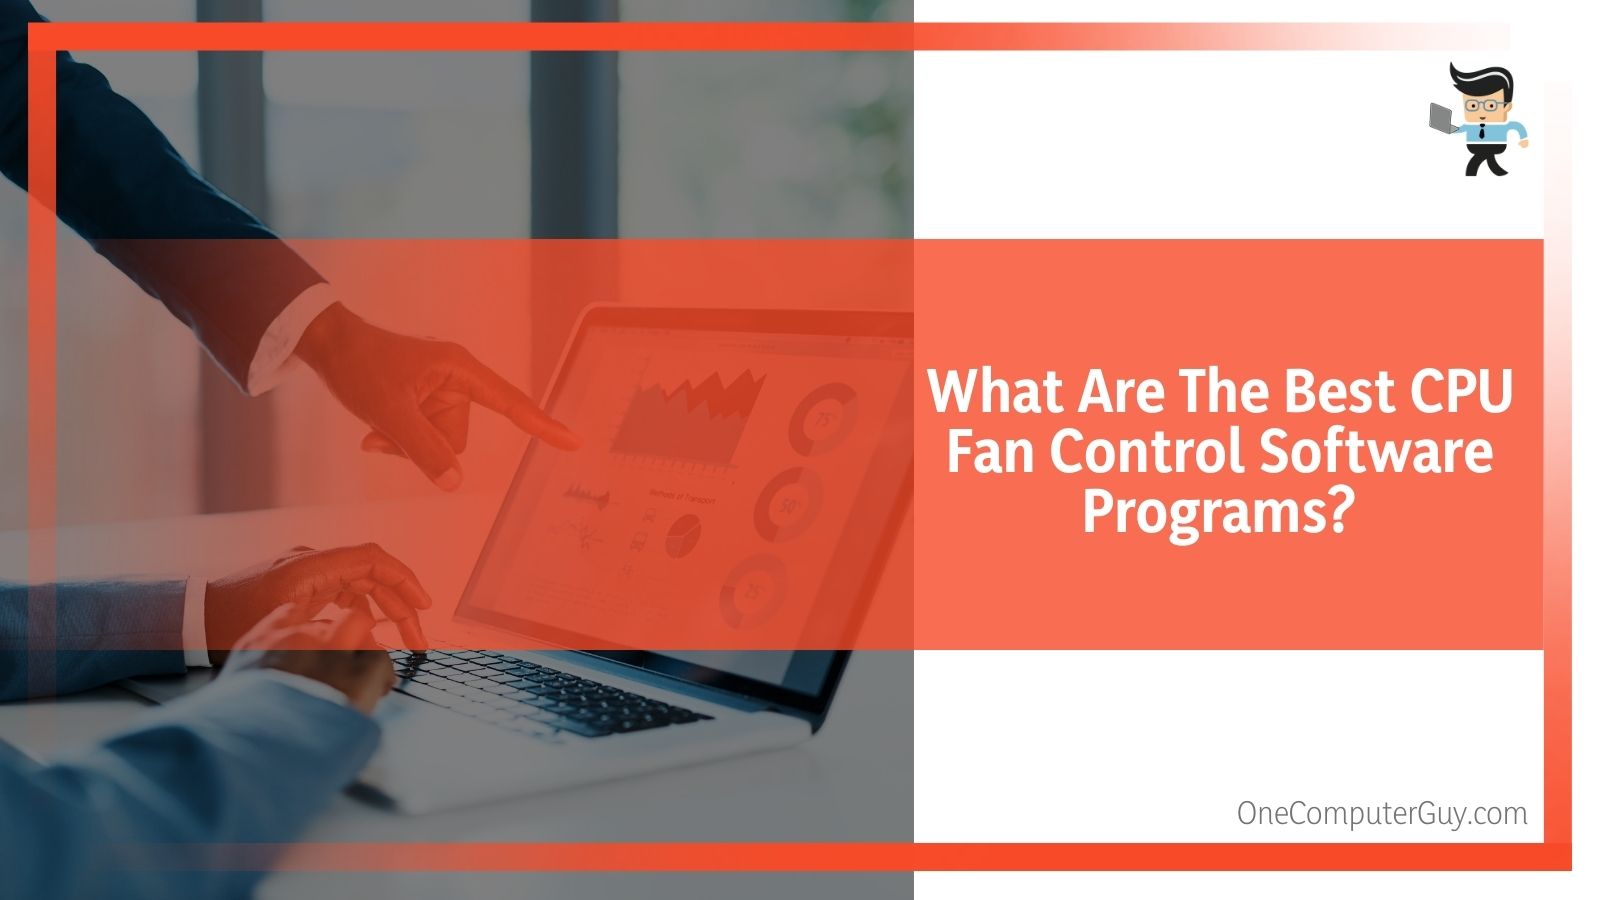 The Best CPU Fan Control Software Programs